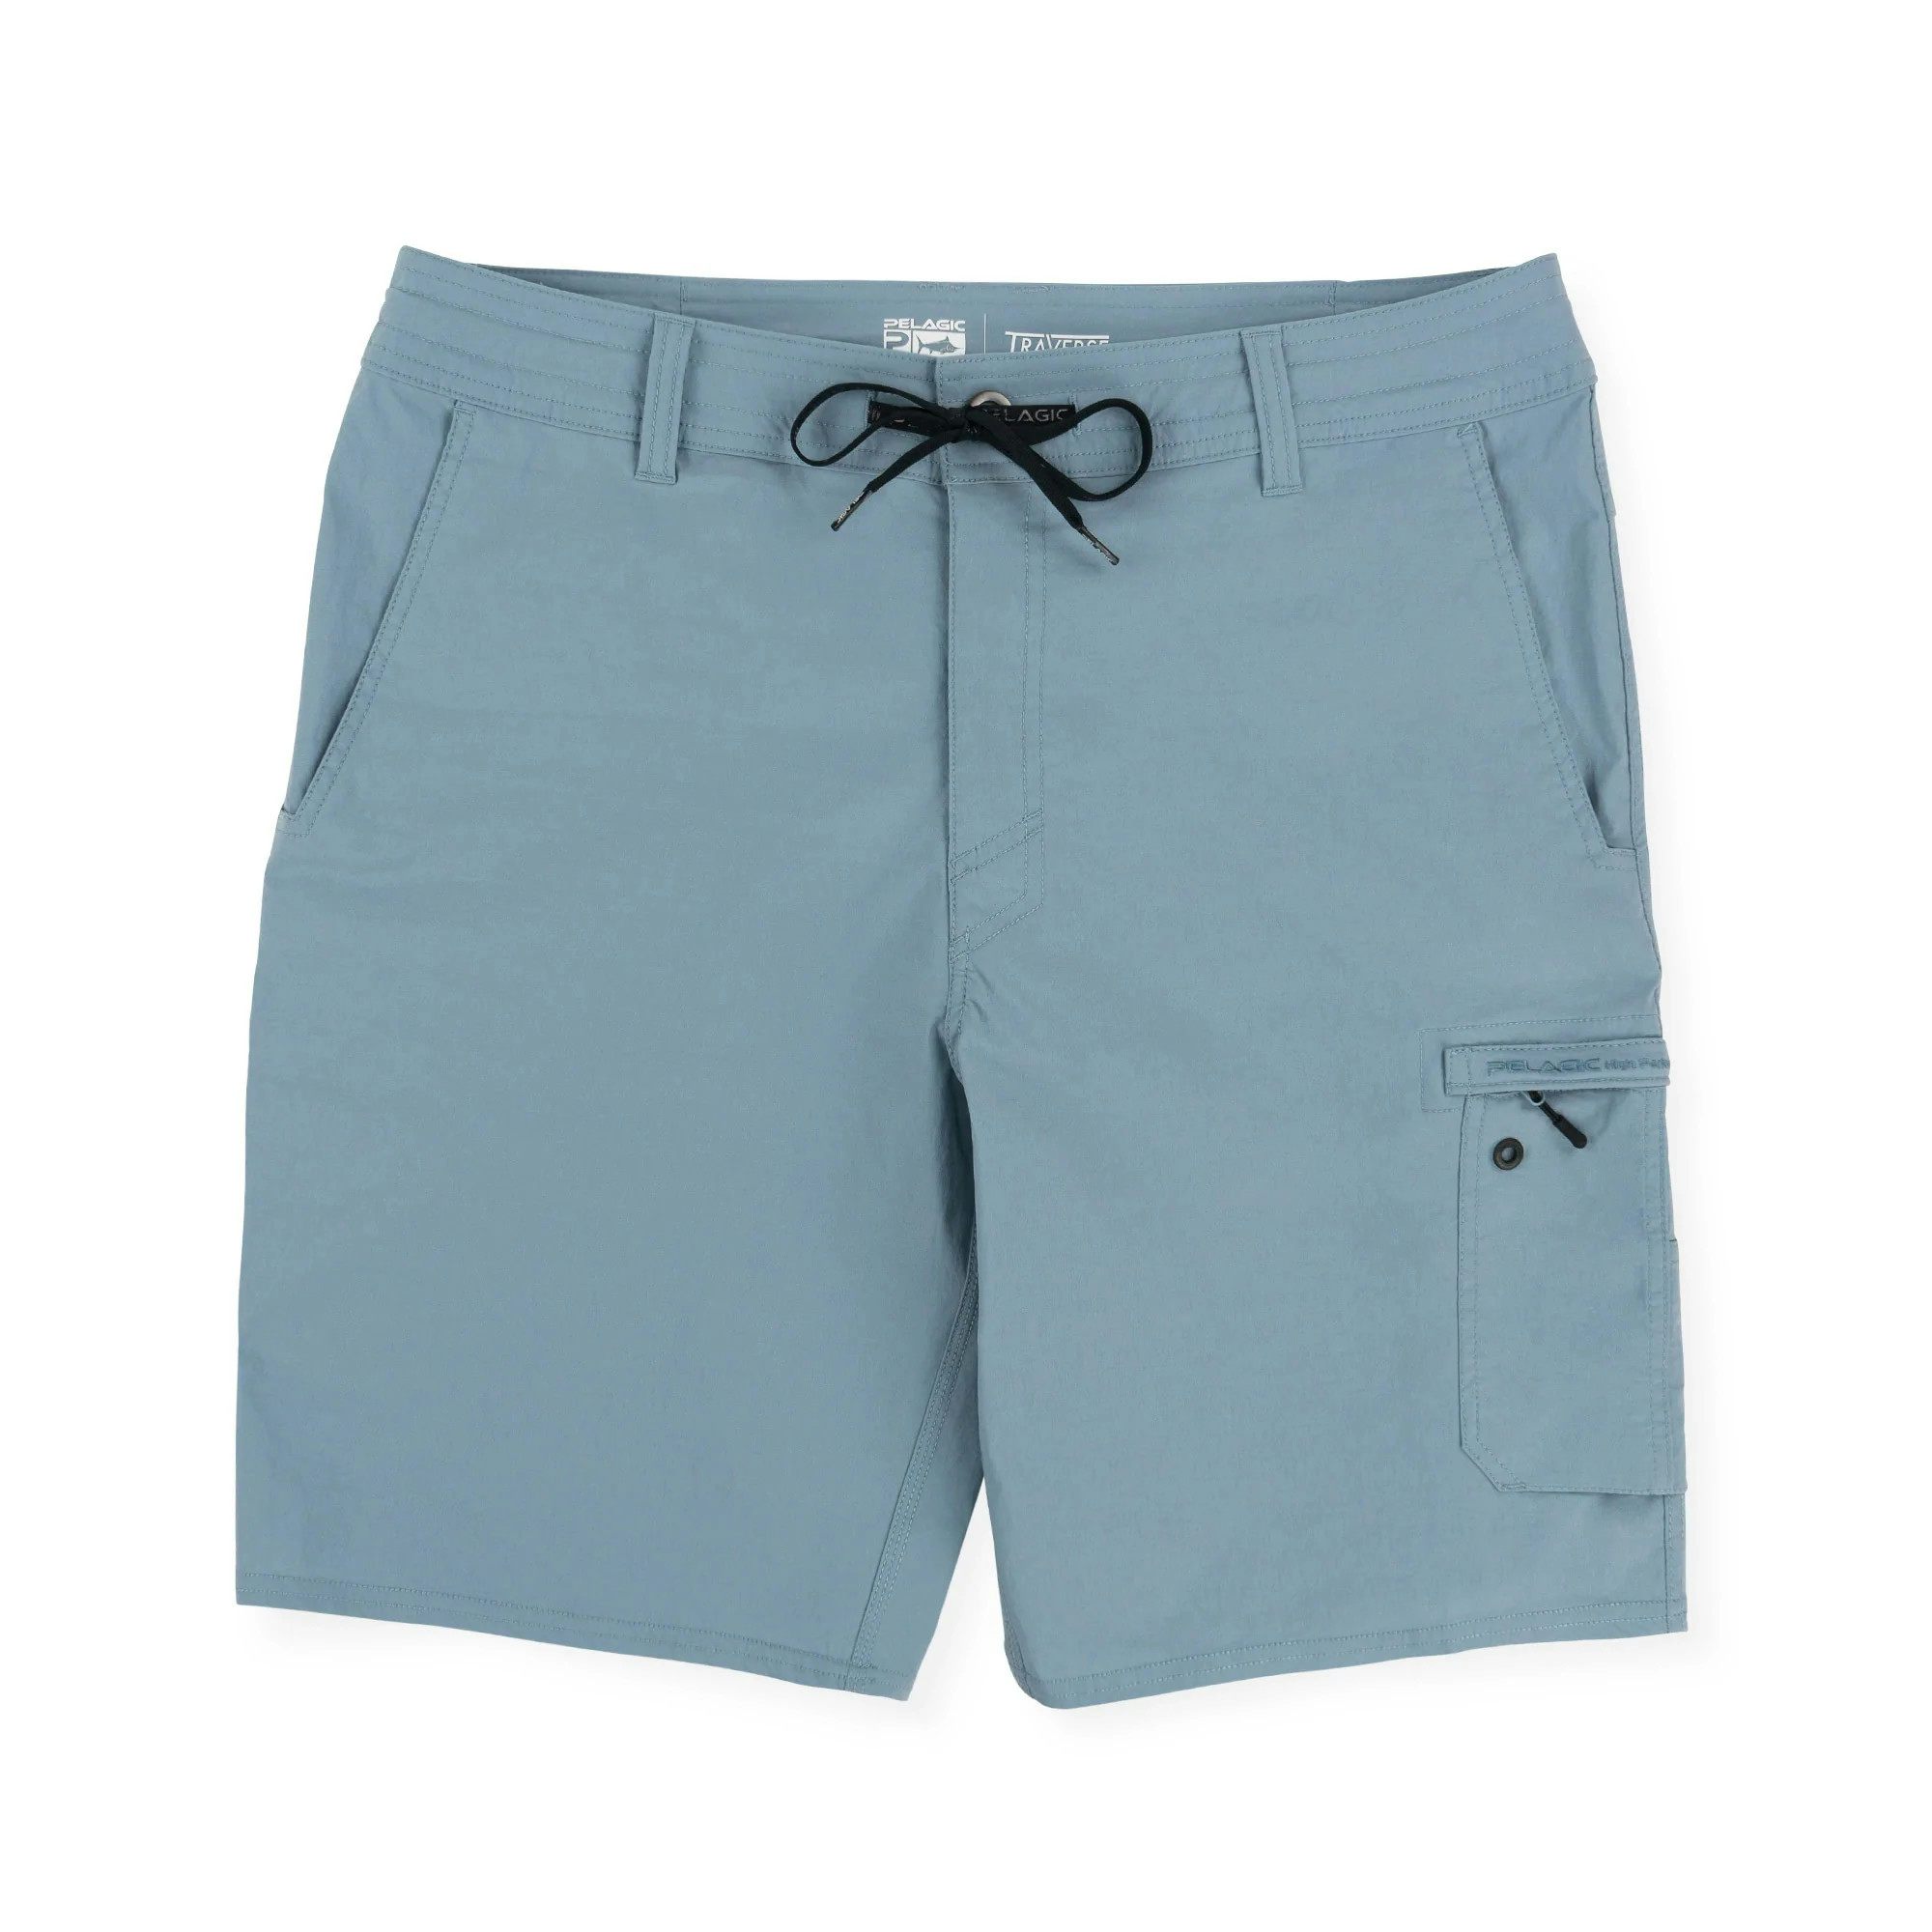 Pelagic Traverse Hybrid Shorts (Men's)